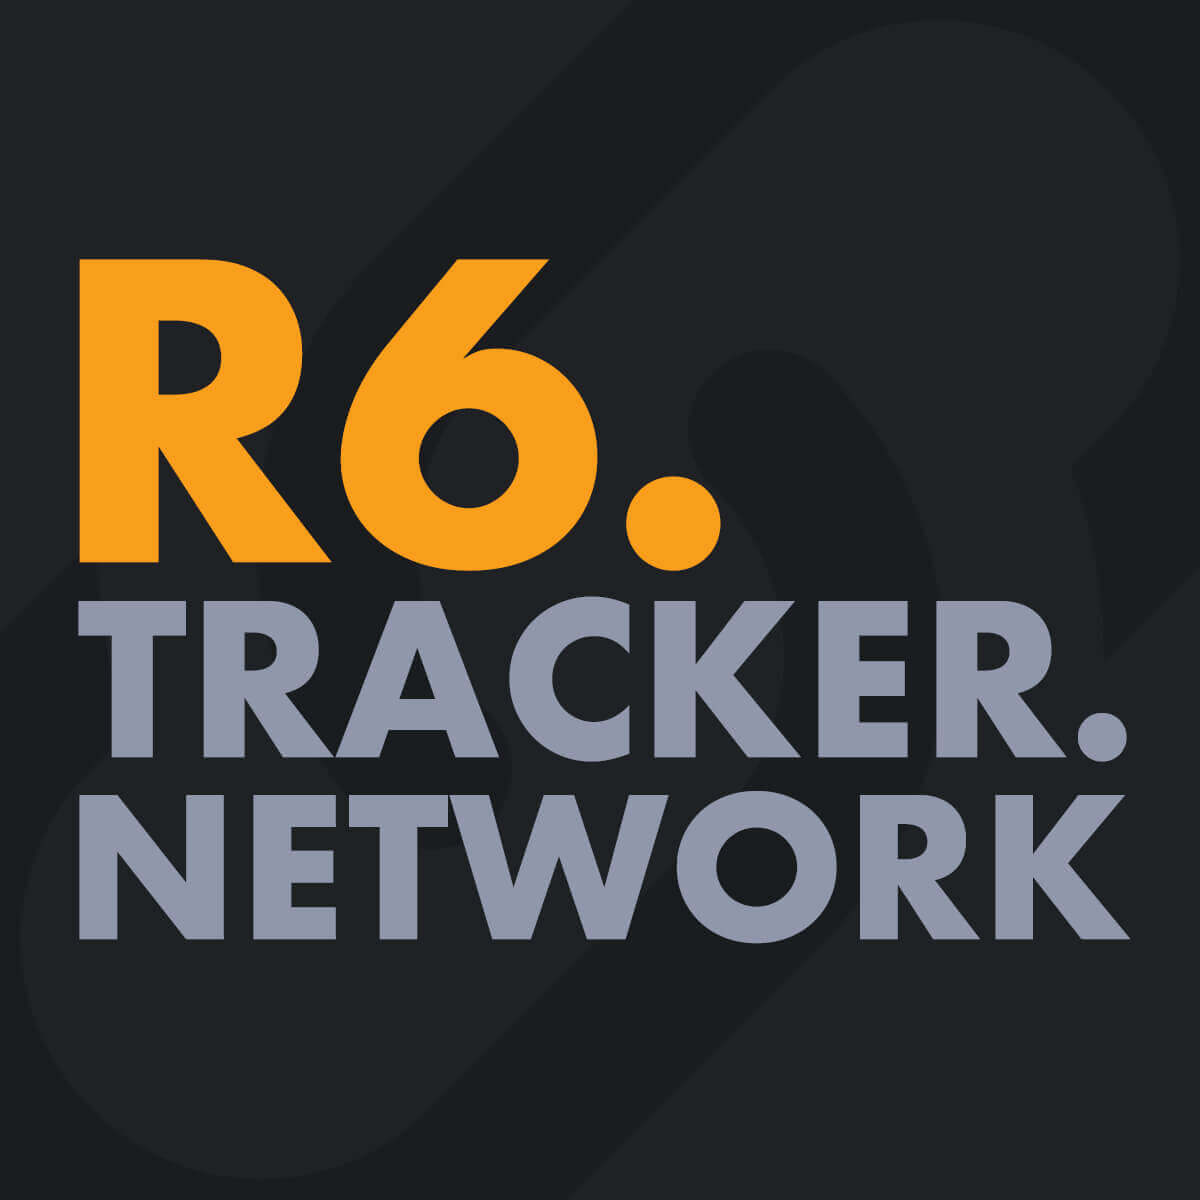 R6 tracker